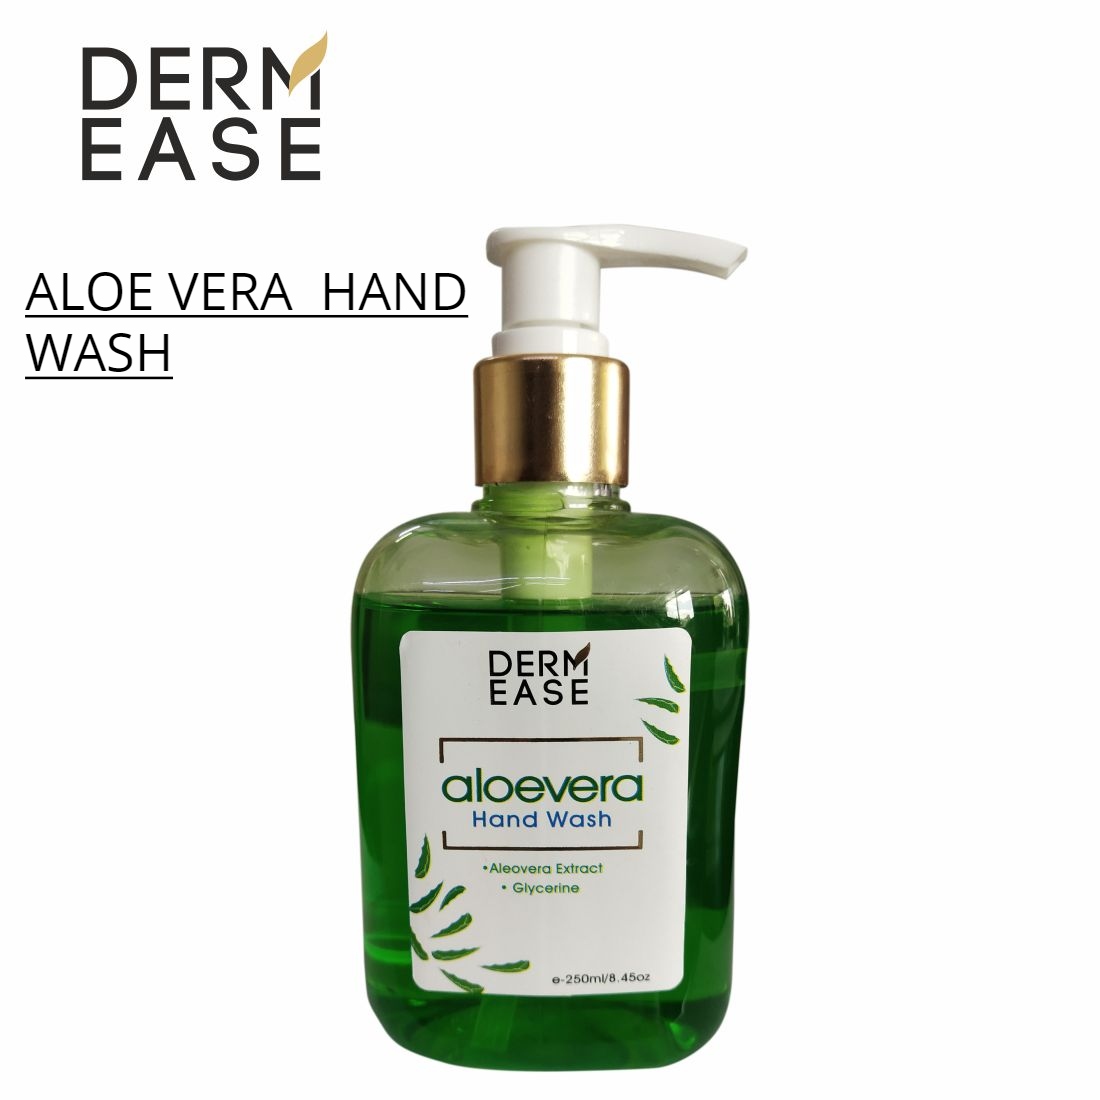 DERM EASE Aloe Vera Hand Wash